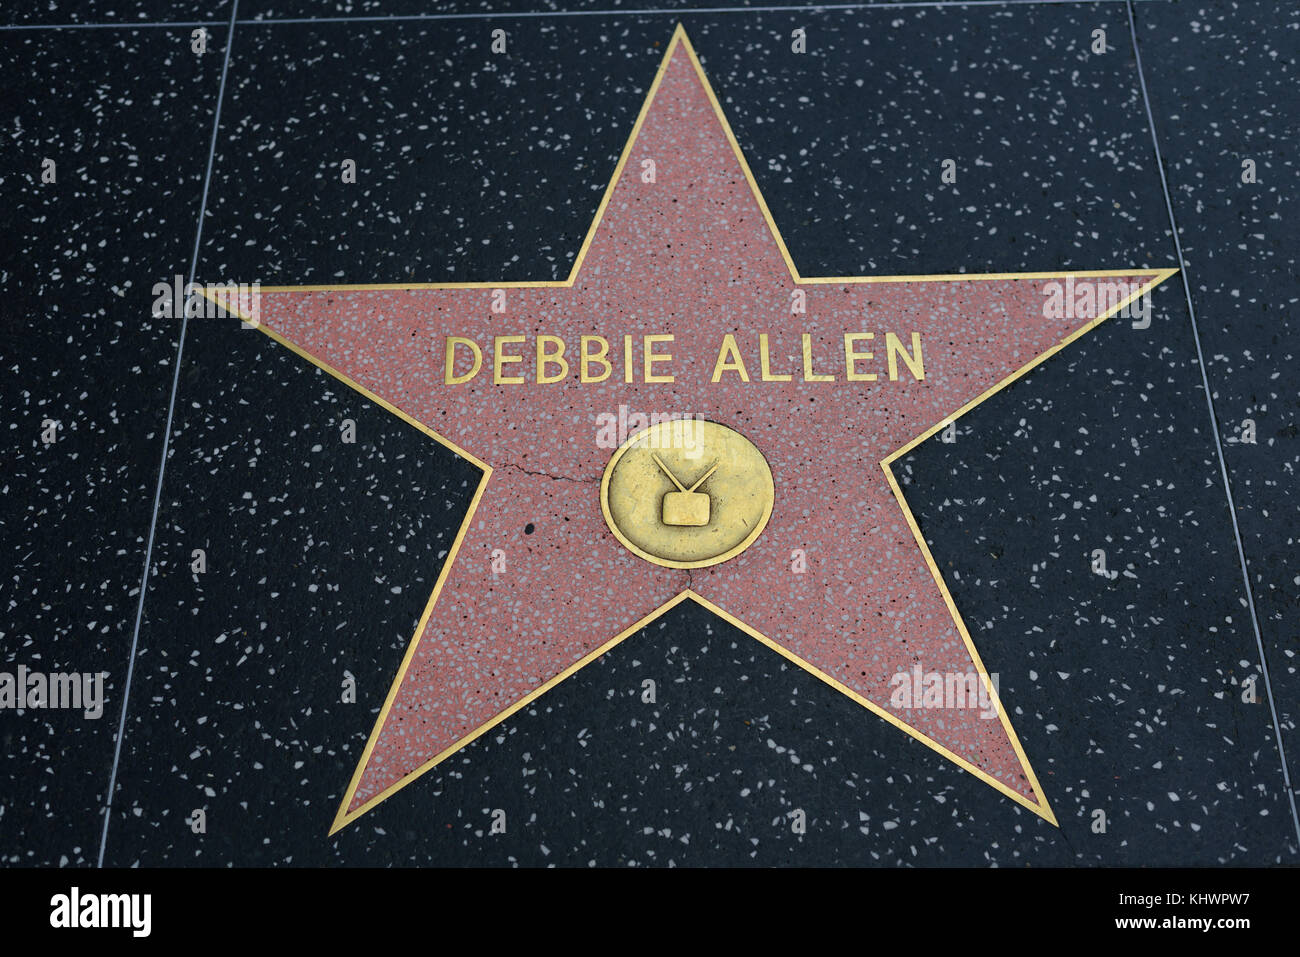 HOLLYWOOD, CA - DEZEMBER 06: Debbie Allen Star auf dem Hollywood Walk of Fame in Hollywood, Kalifornien am 6. Dezember 2016. Stockfoto